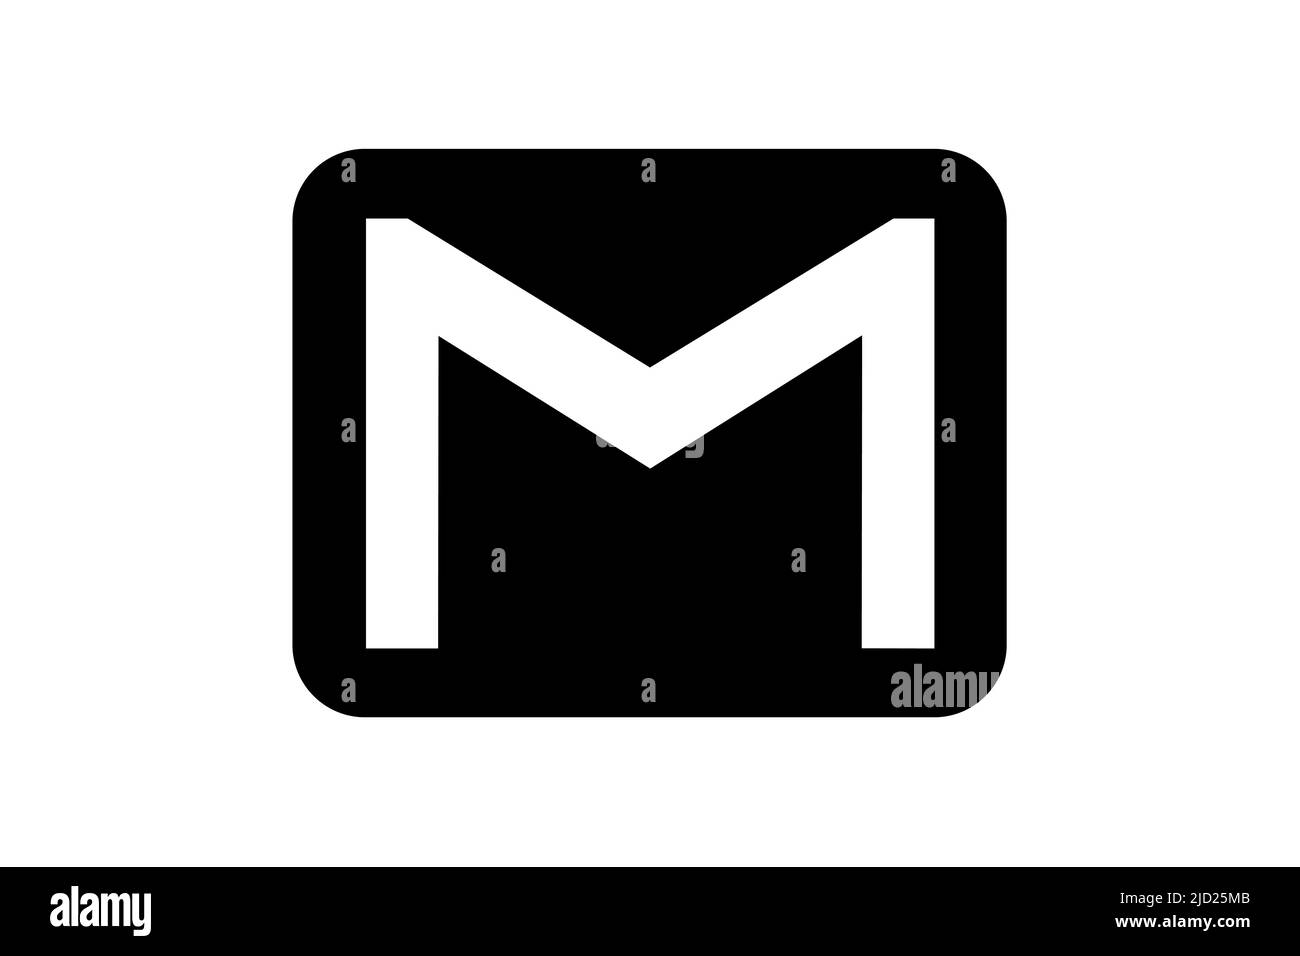 Envelope. Gmail. Gmail social network logo design in black on a white background. Social network. Illustrative design. Illustration. Stock Photo